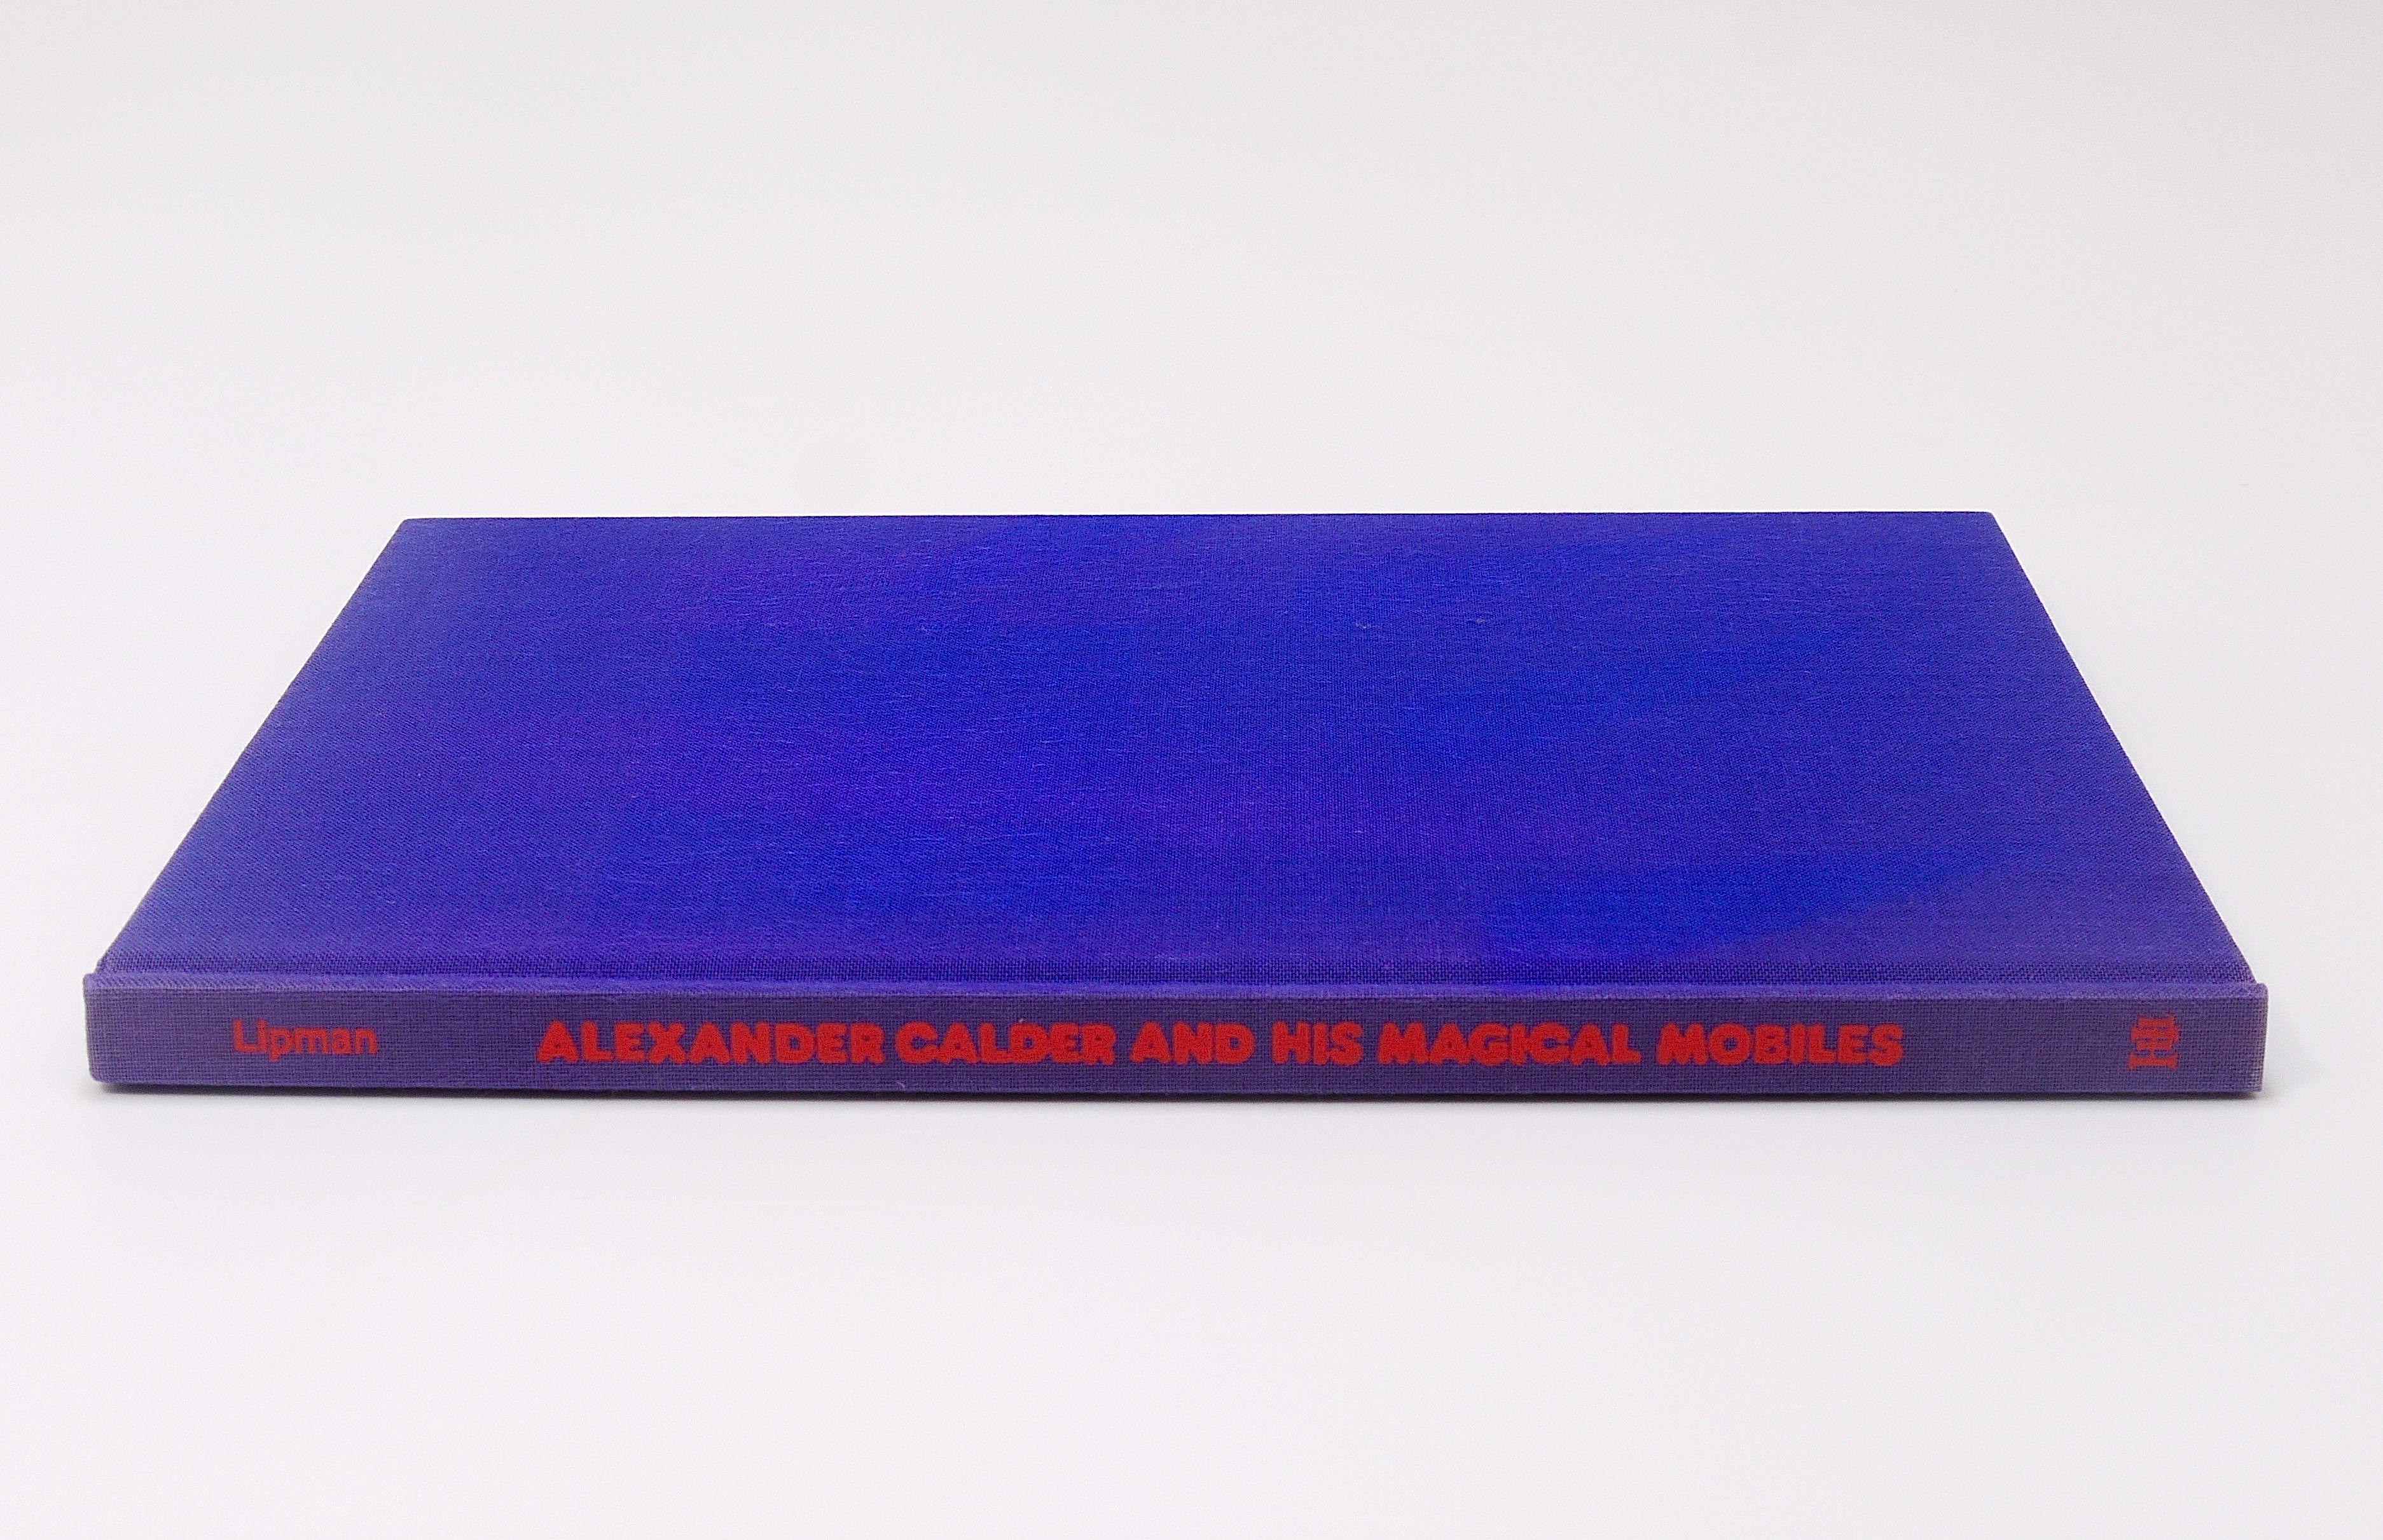 Alexander Calder and His Magical Mobiles Art Book, Lipman & Aspinwal, 1st Ed. For Sale 12